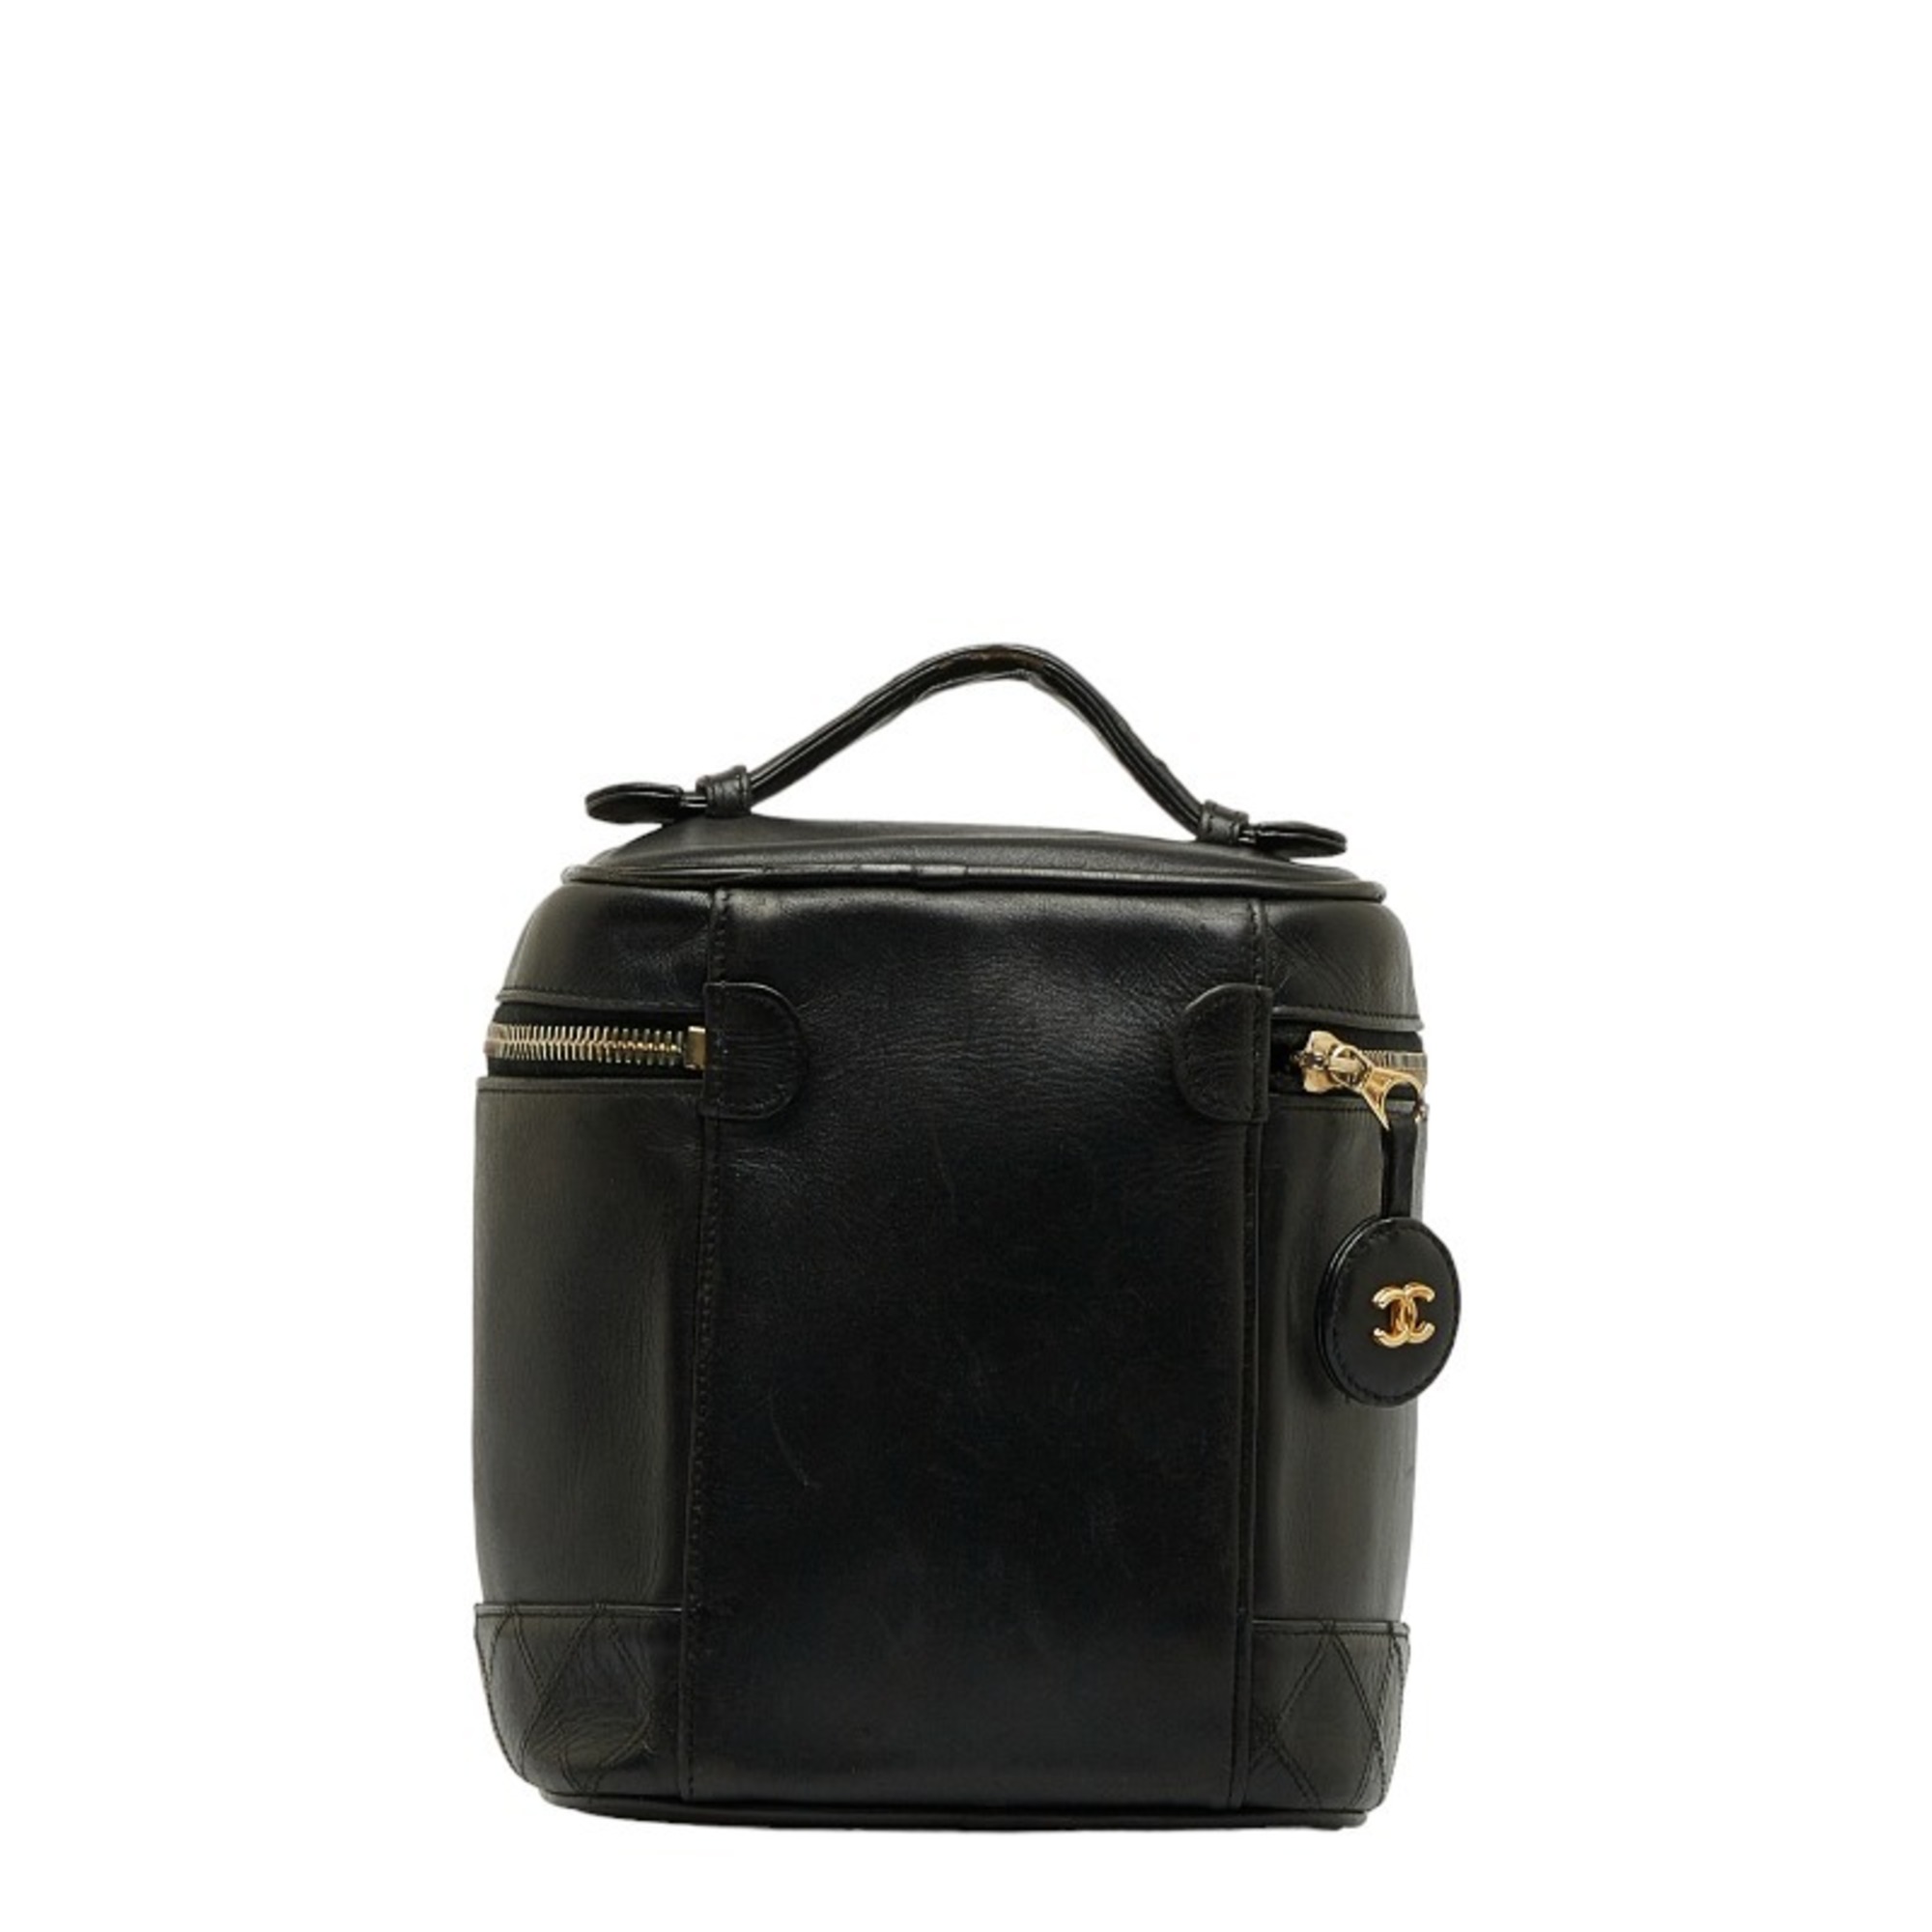 CHANEL Bicolore Vanity Bag Pouch Black Leather Women's